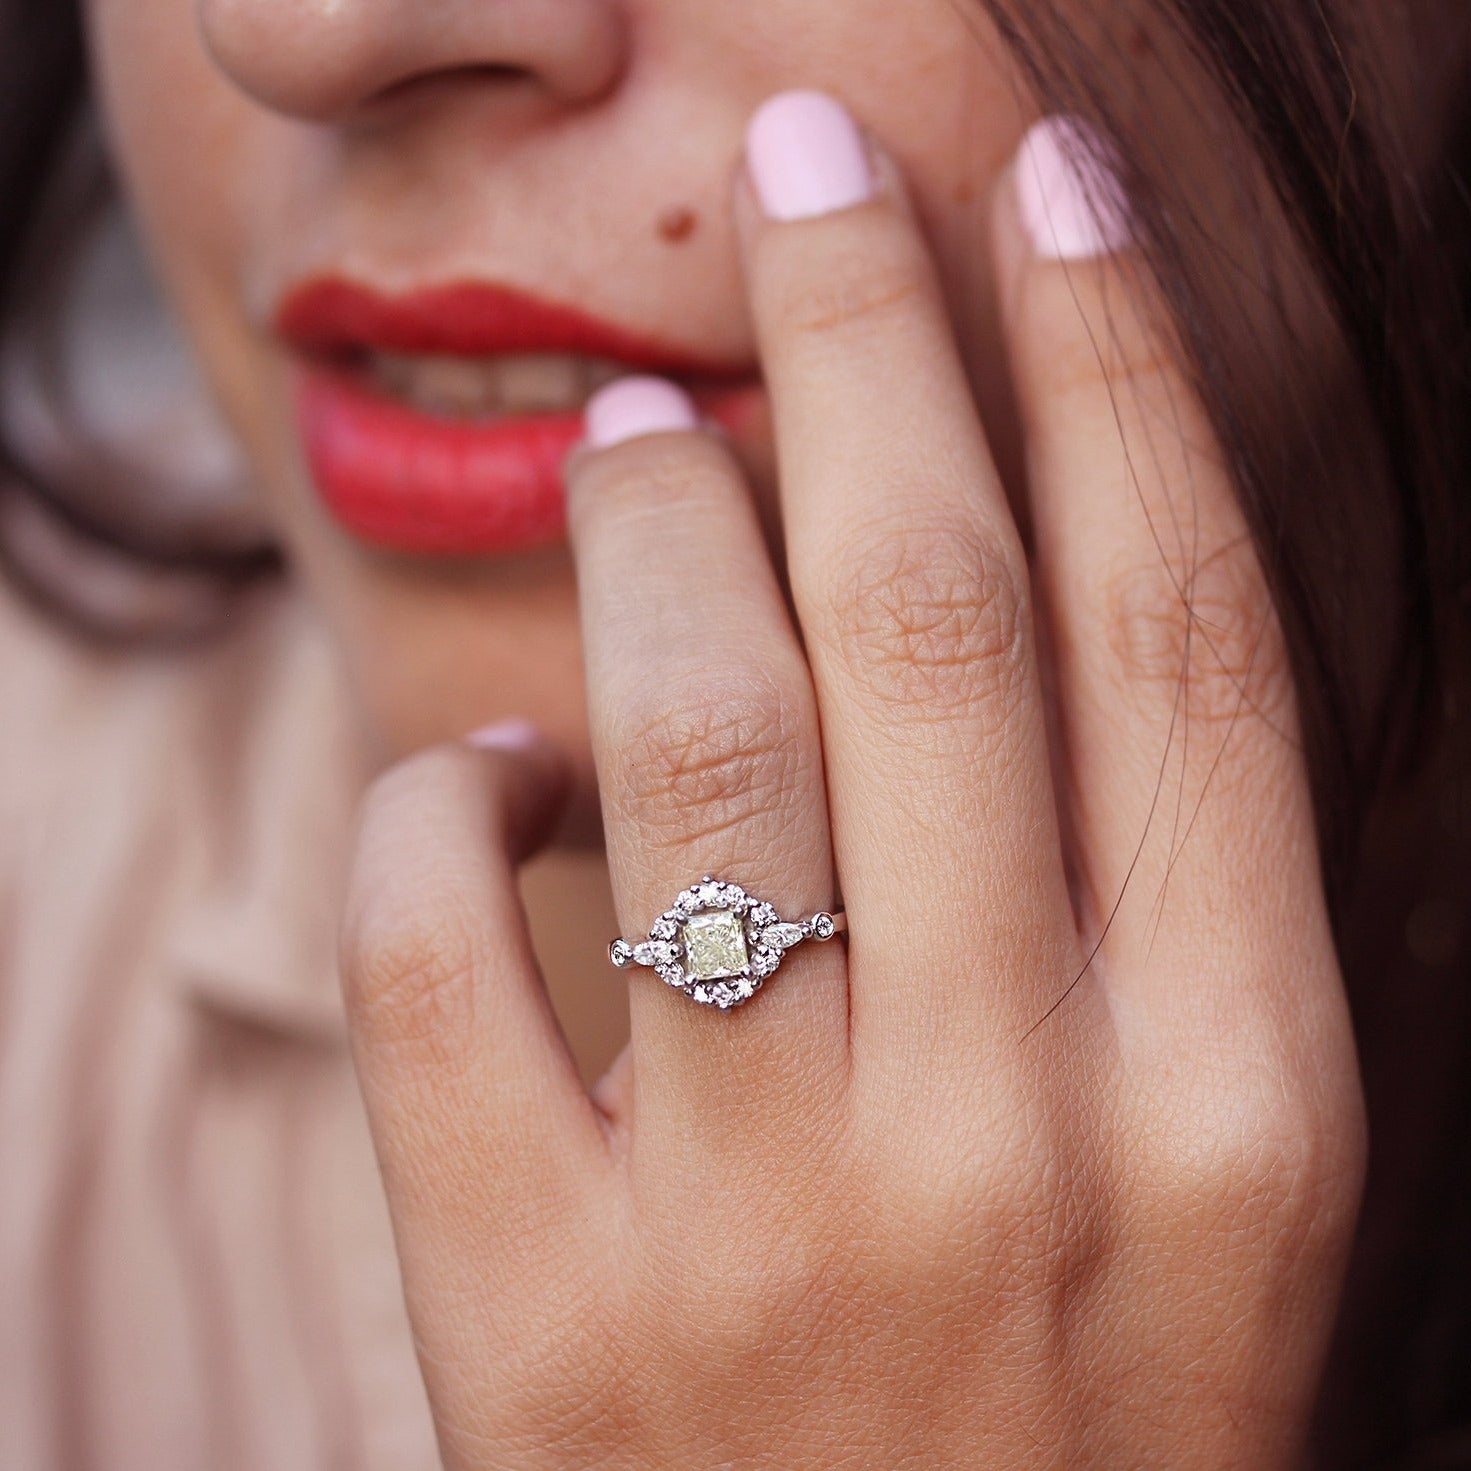 Princess Cut Diamond Engagement Ring, 0.8 carat, 14K White Gold, Ring Size 6.5 - Ready To Ship 'Ecliptic' - sillyshinydiamonds